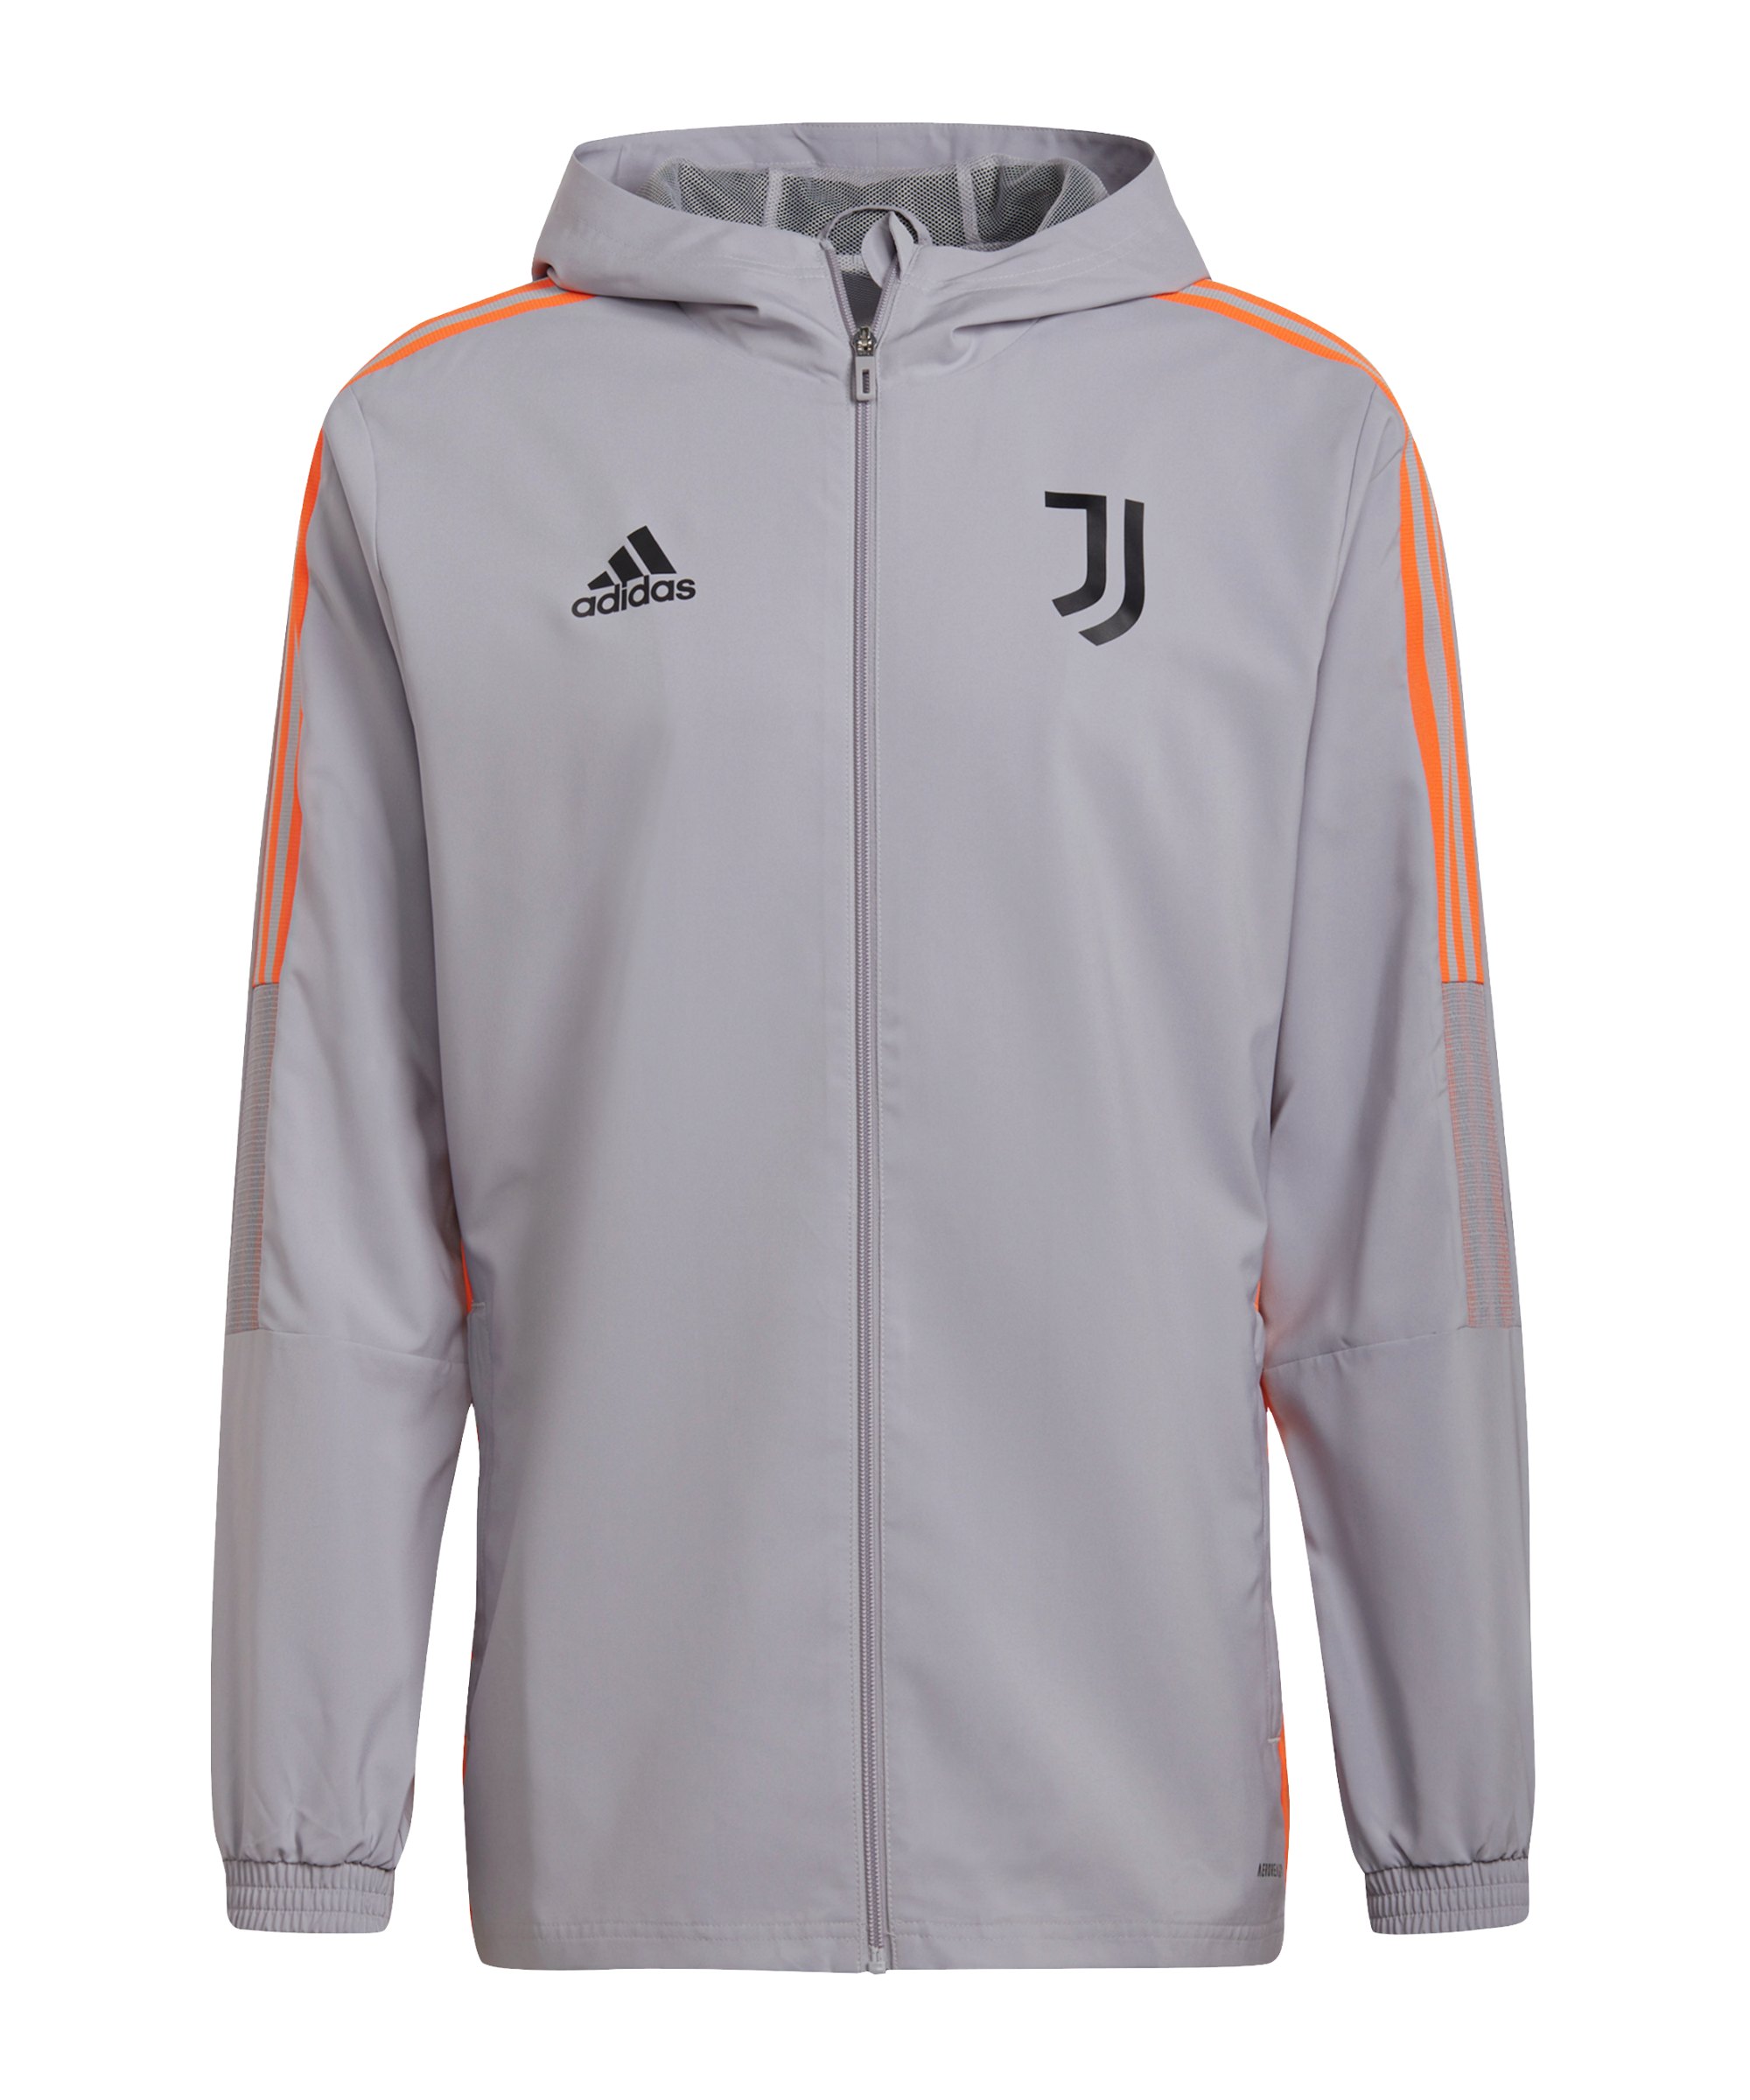 adidas Juventus Turin Prematch Jacke 2021/2022 Grau - grau